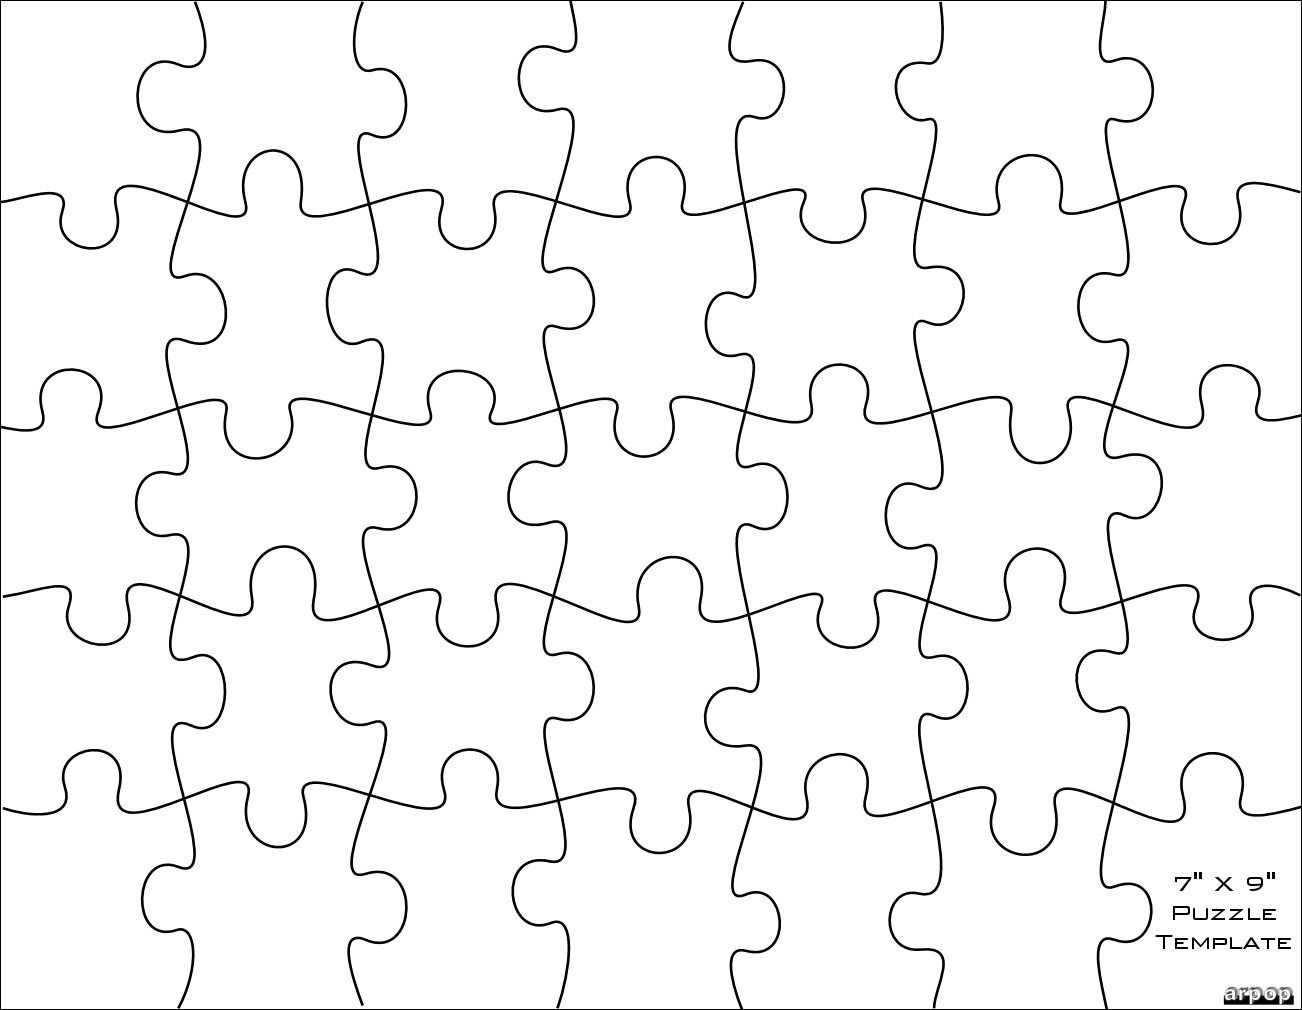 Free Scroll Saw Patternsarpop: Jigsaw Puzzle Templates In Jigsaw Puzzle Template For Word